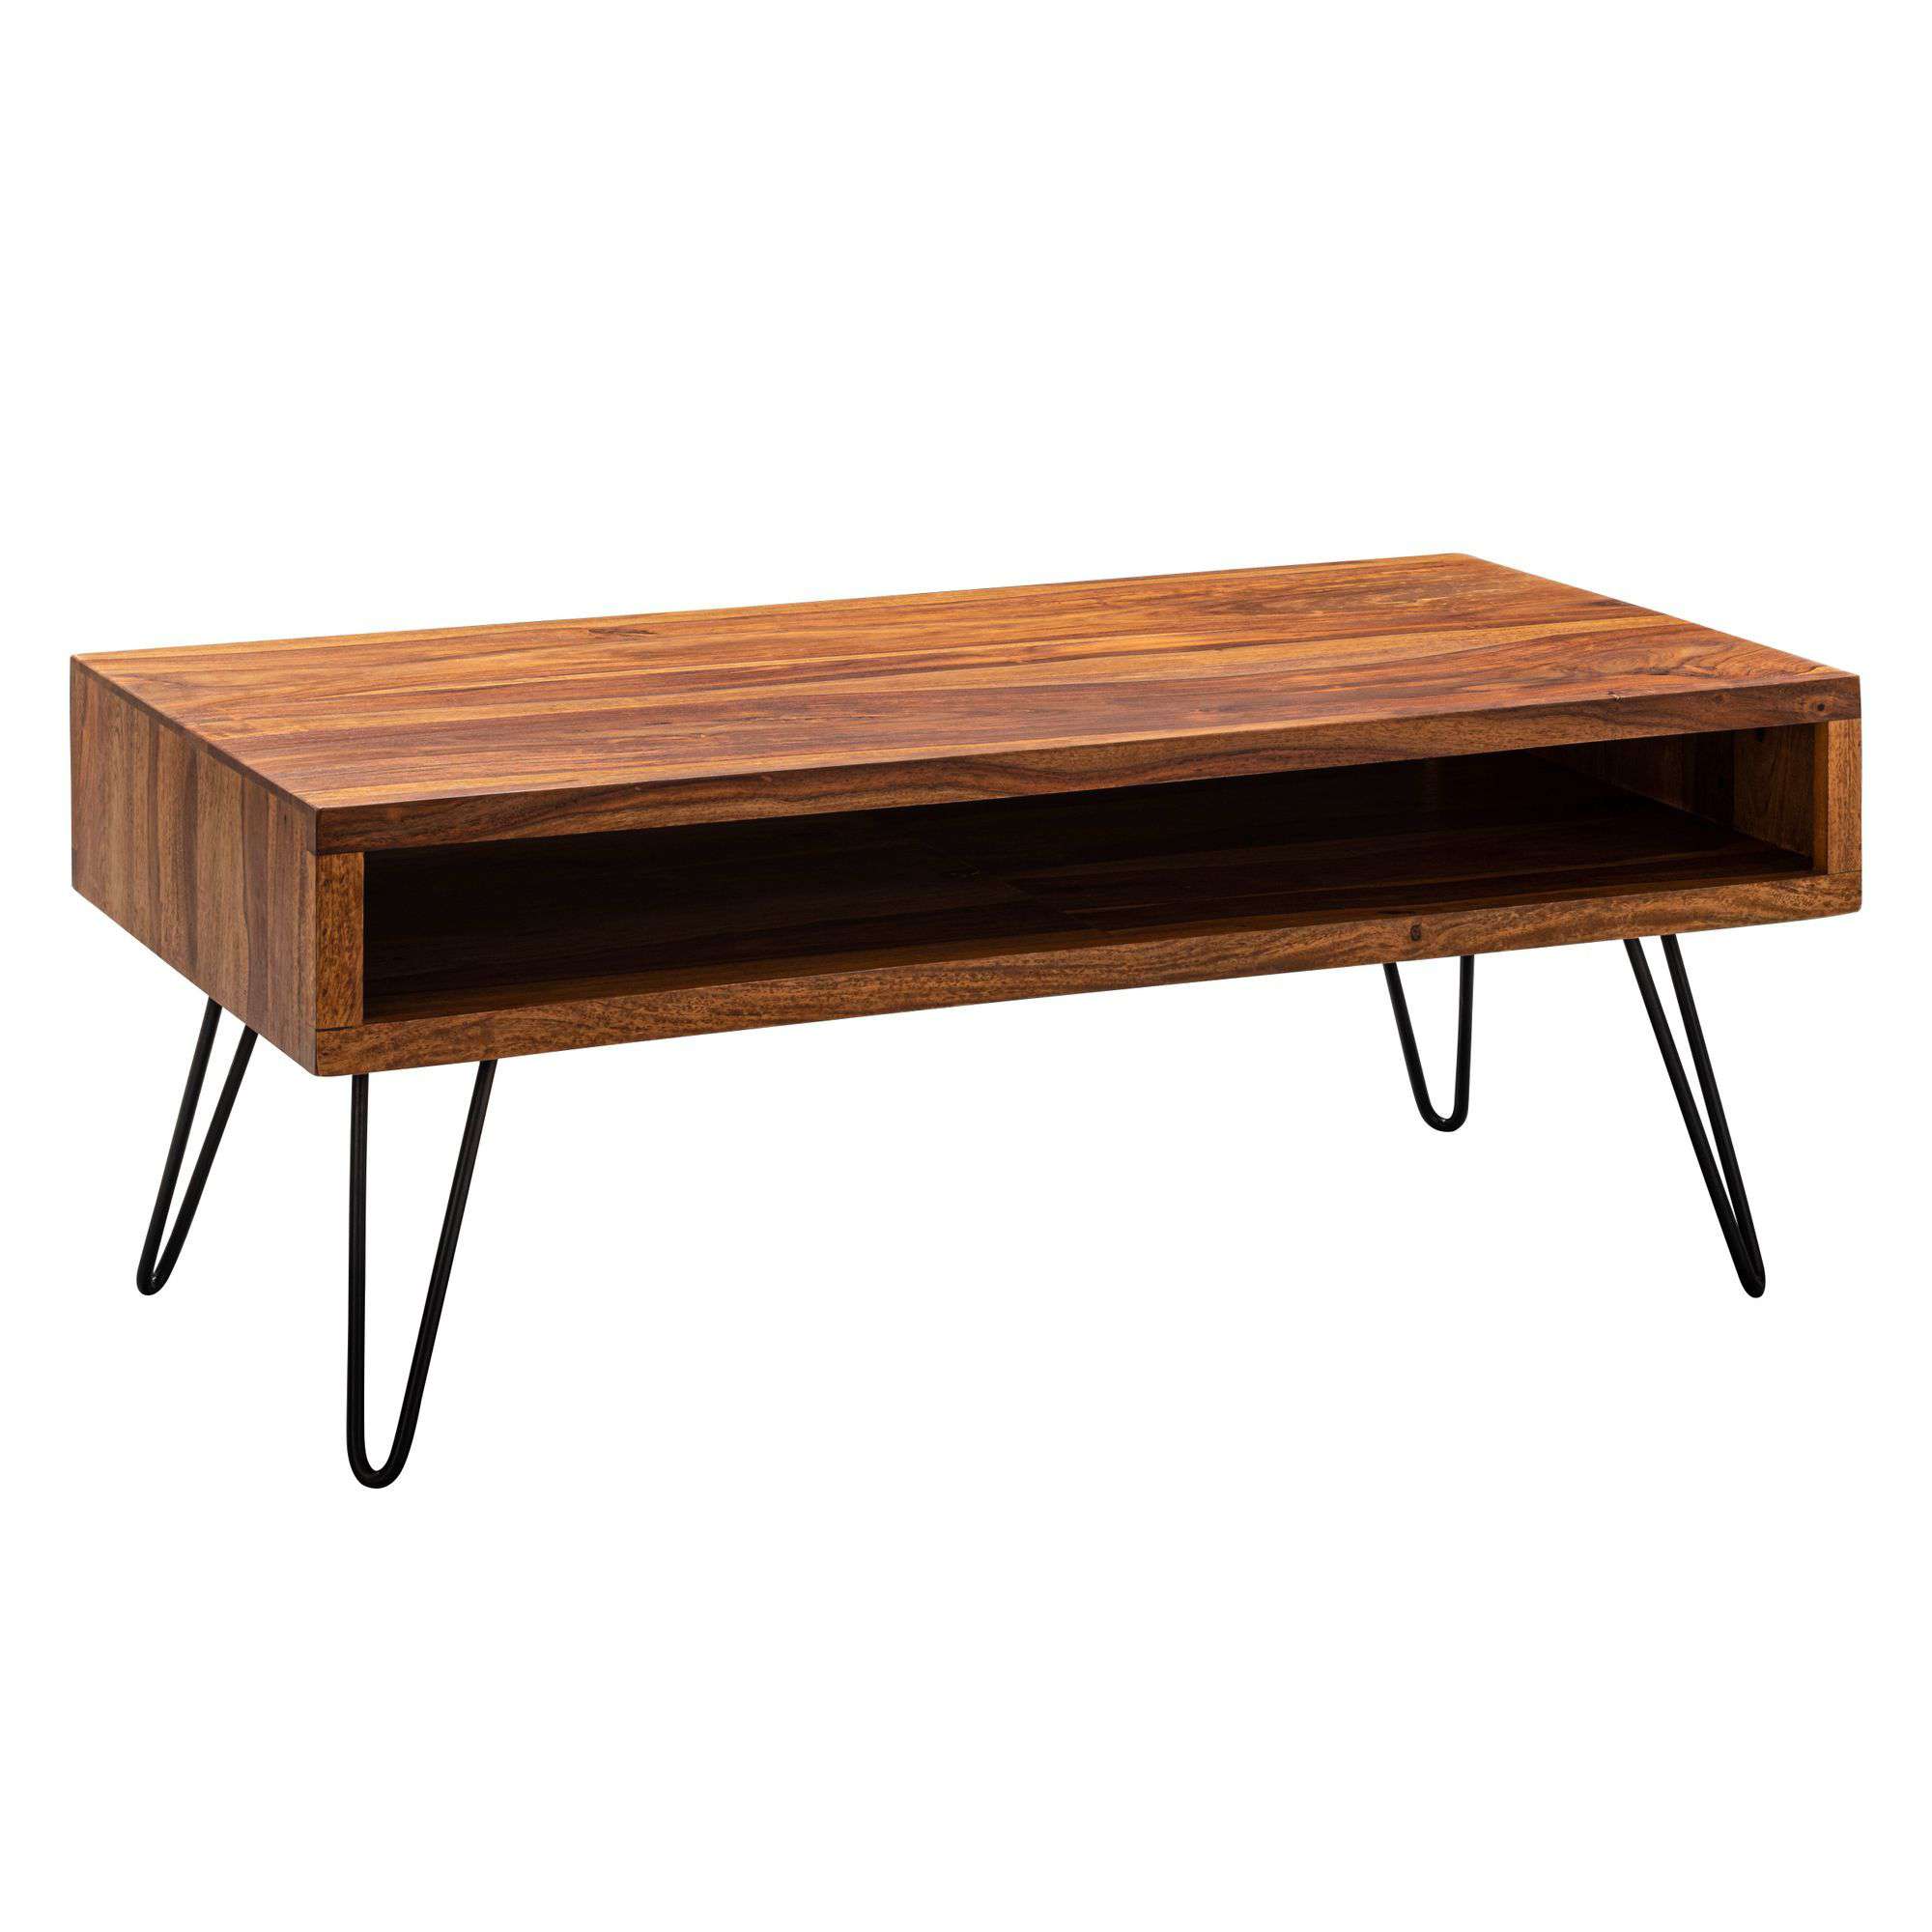 Nancy's Industrial Coffee Table - Sheesham wood - Coffee table - Side table - Coffee tables - 100 x 50 x 40 cm